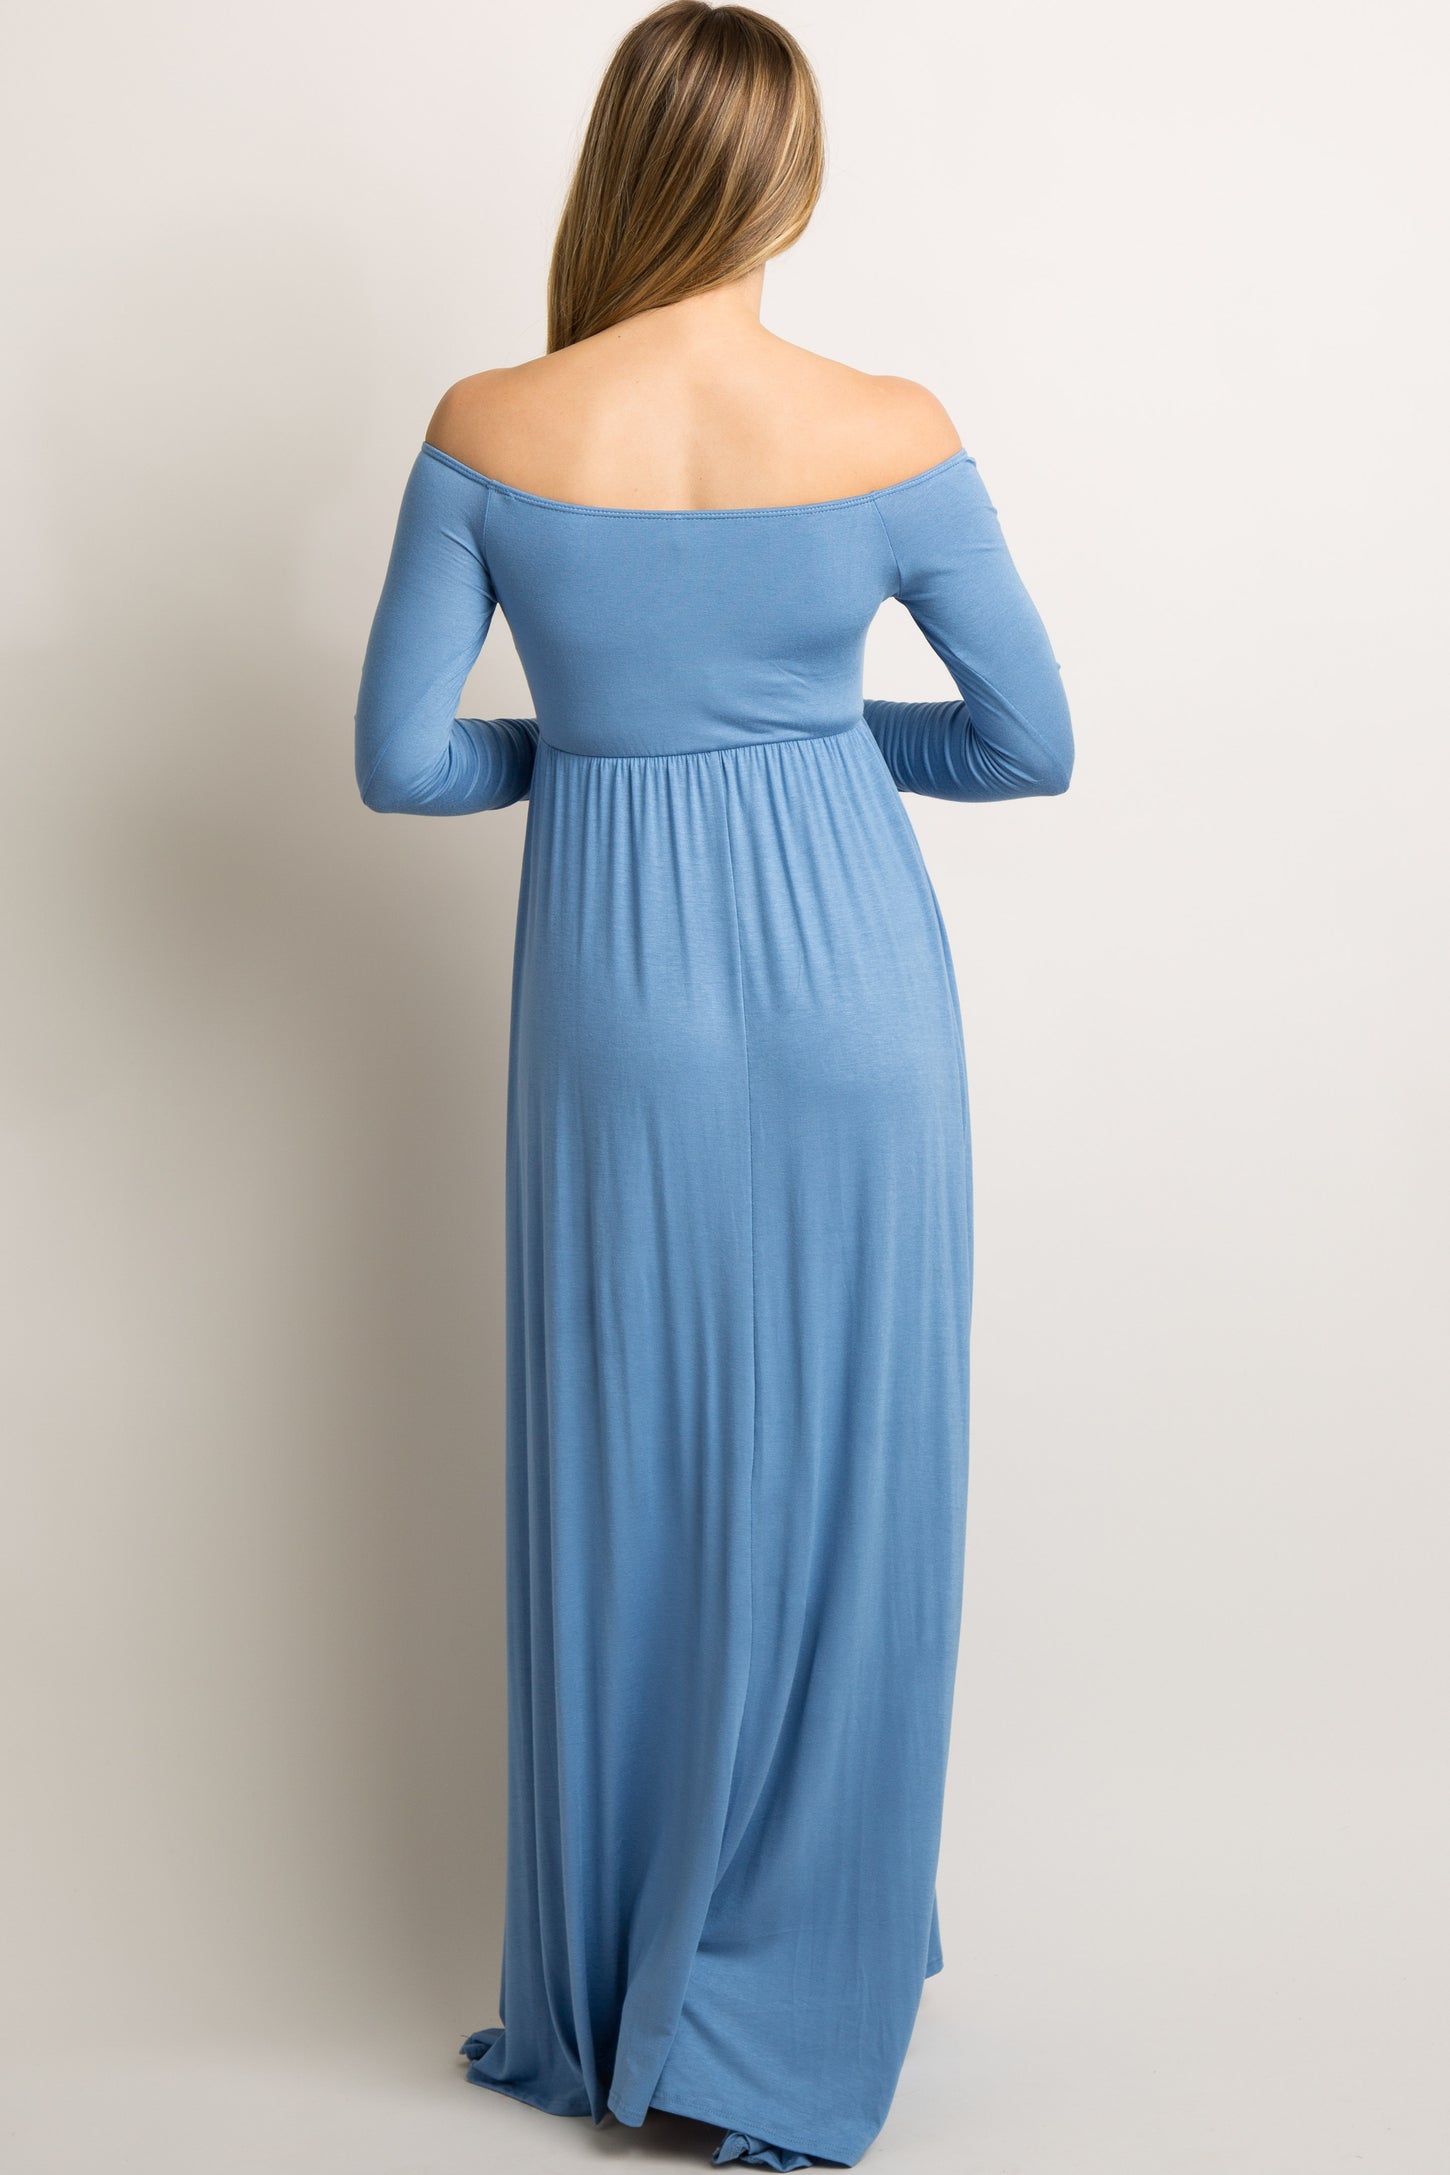 PinkBlush Petite Blue Solid Off Shoulder Maternity Maxi Dress